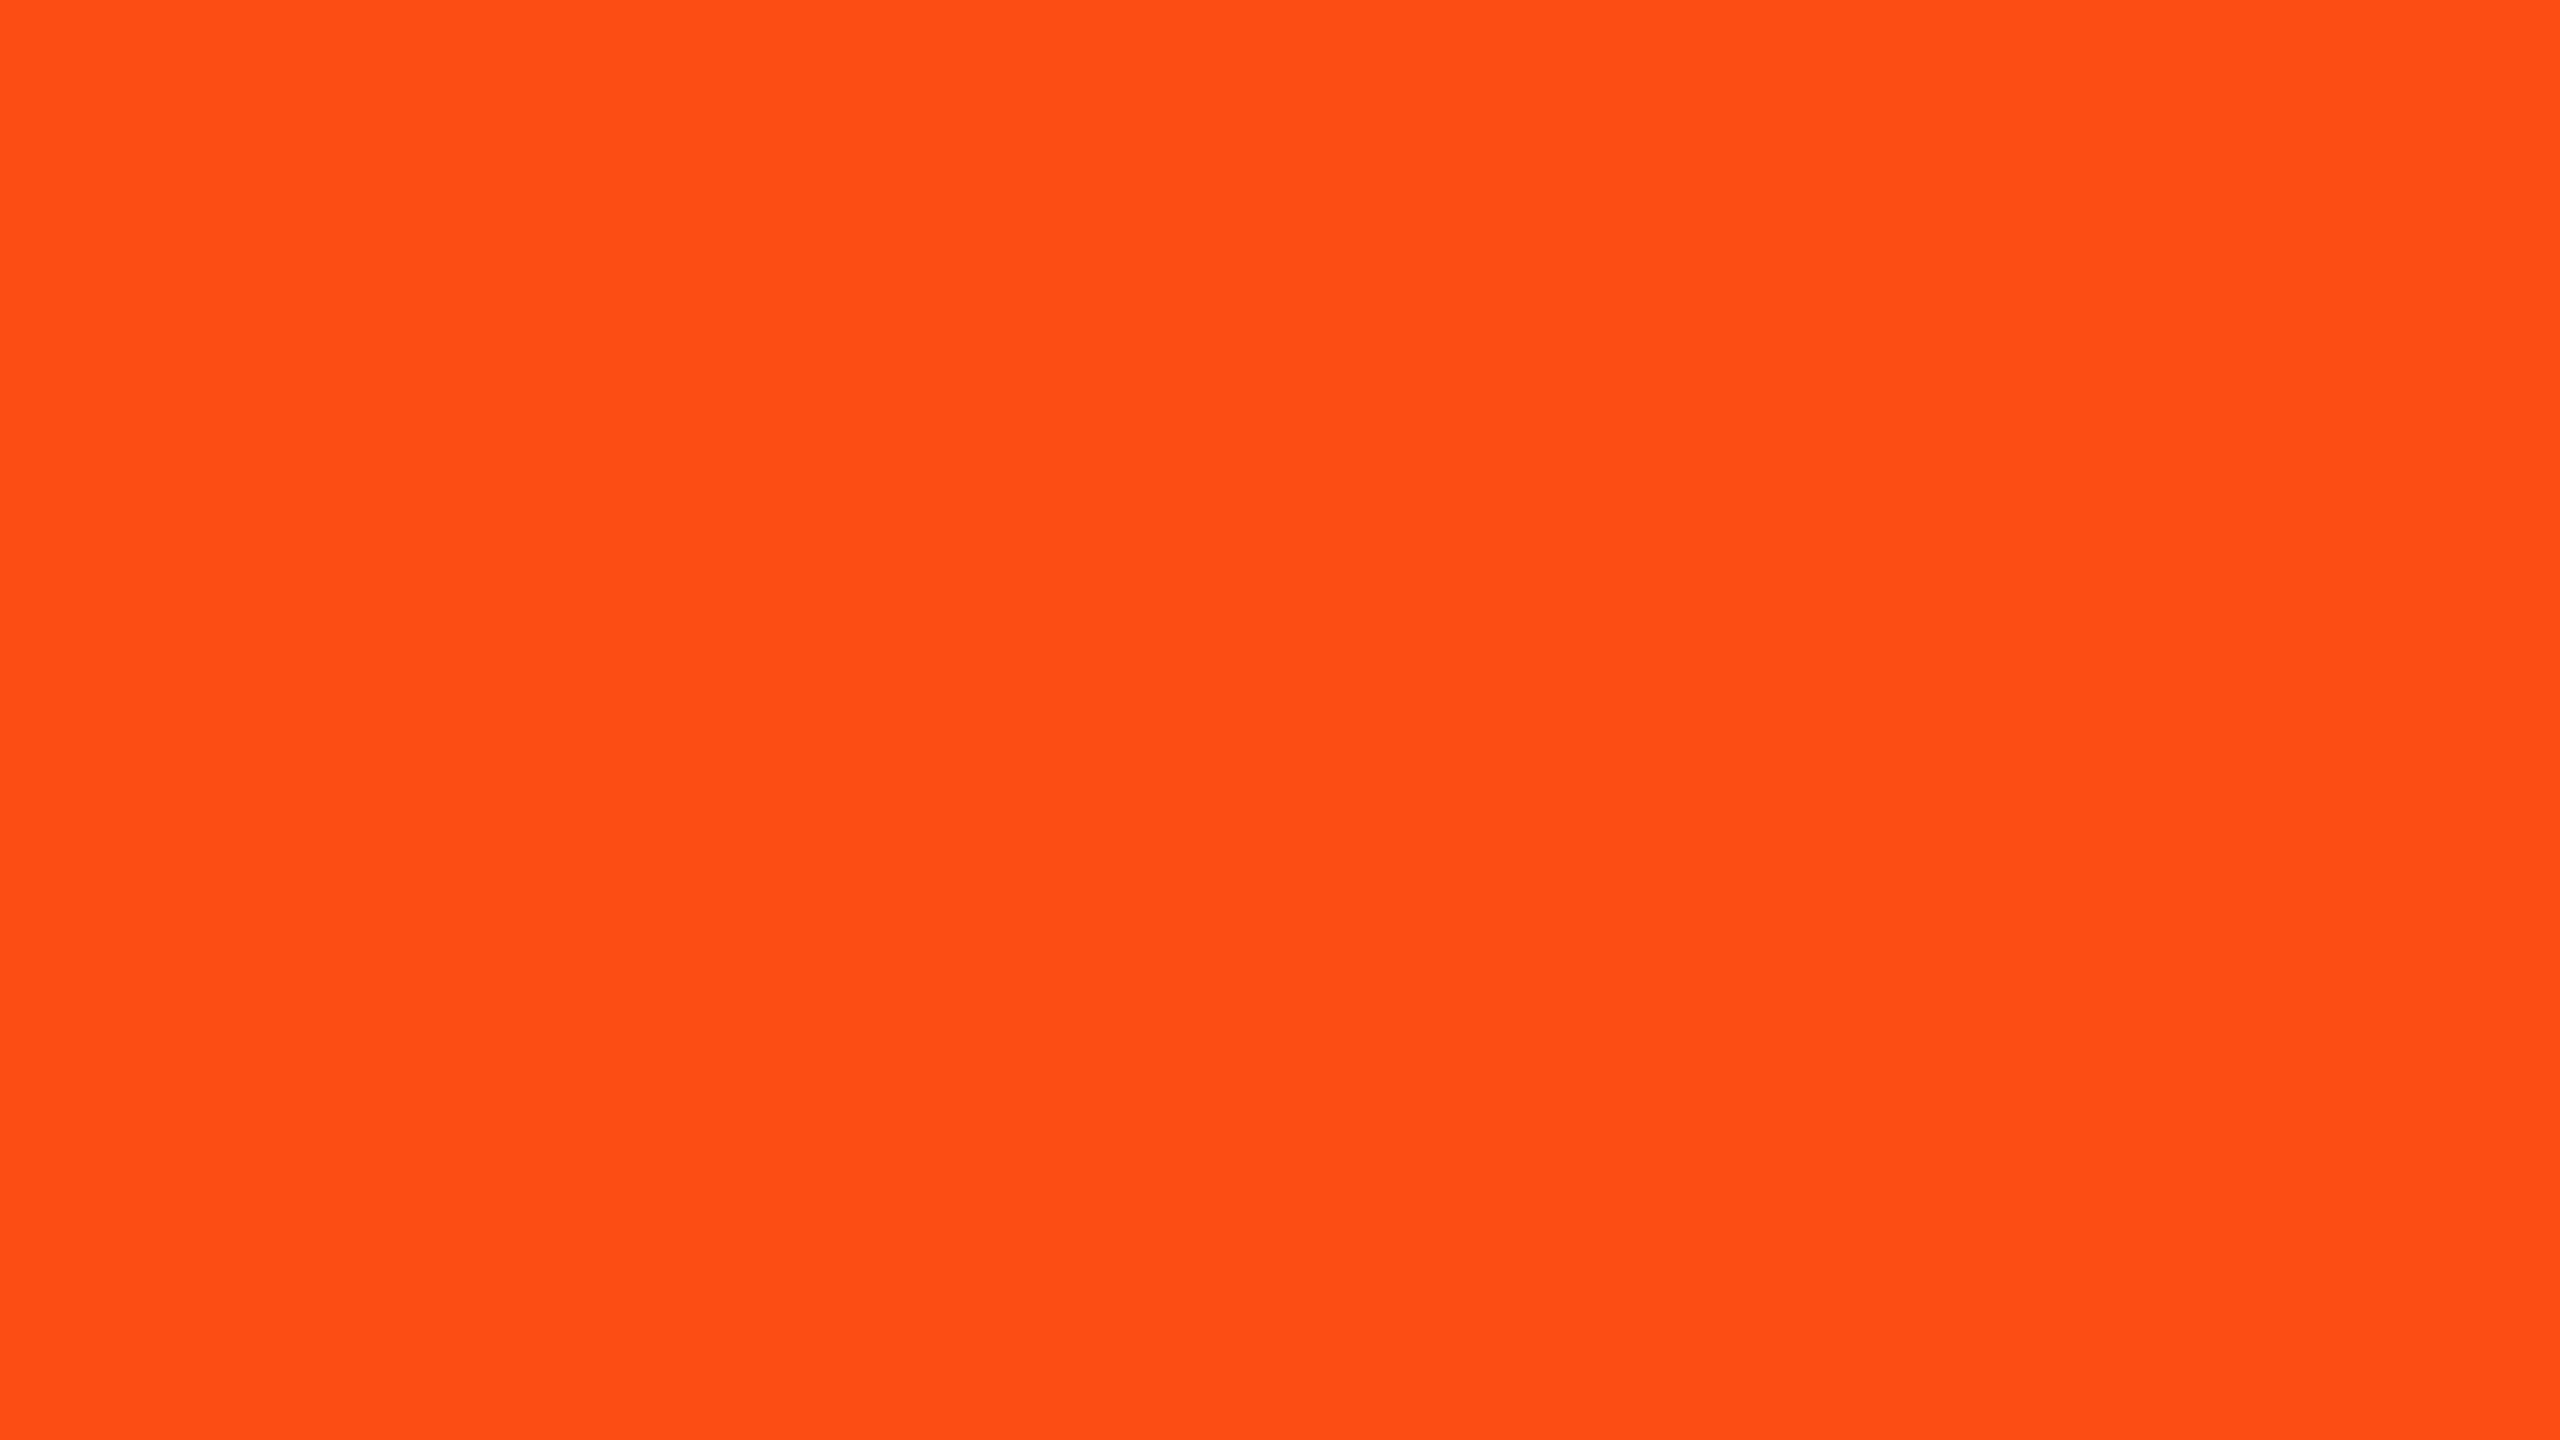 1366x768 Yellow Orange Solid Color Background  Orange paint colors Solid color  backgrounds Plains background